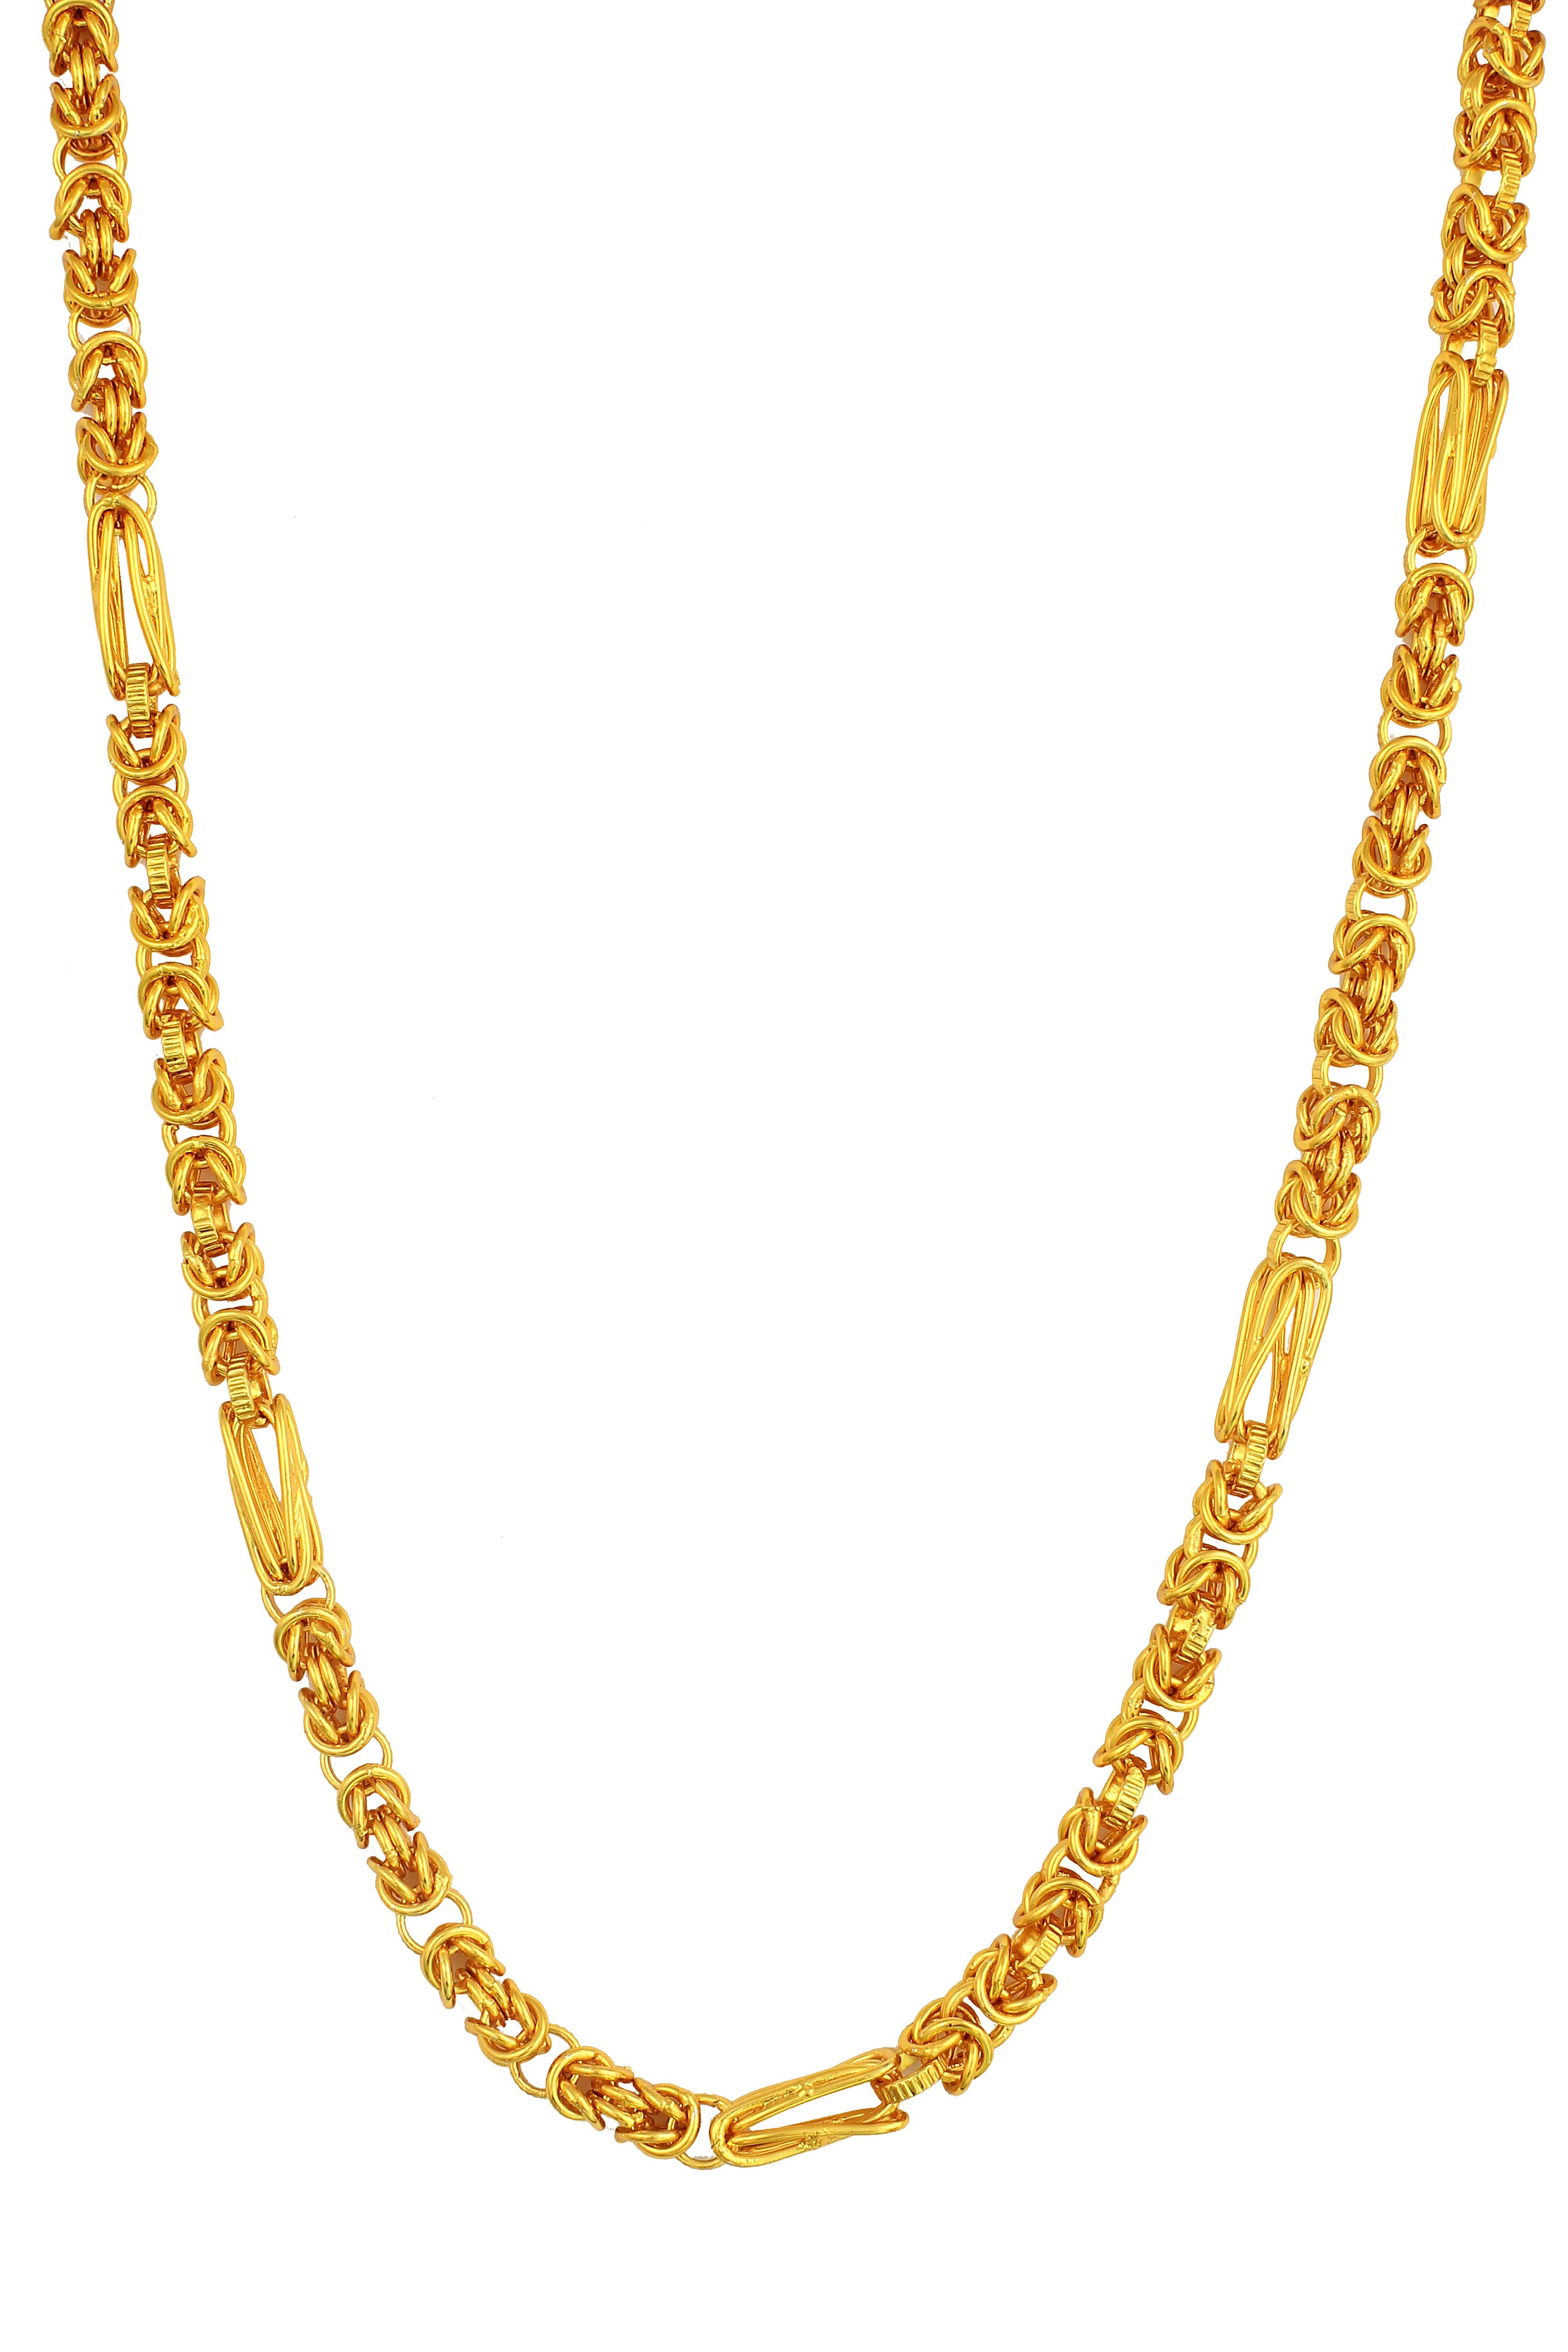 Dipali Designer Gold Plated Chain For Mens & Boys: Buy Dipali Designer